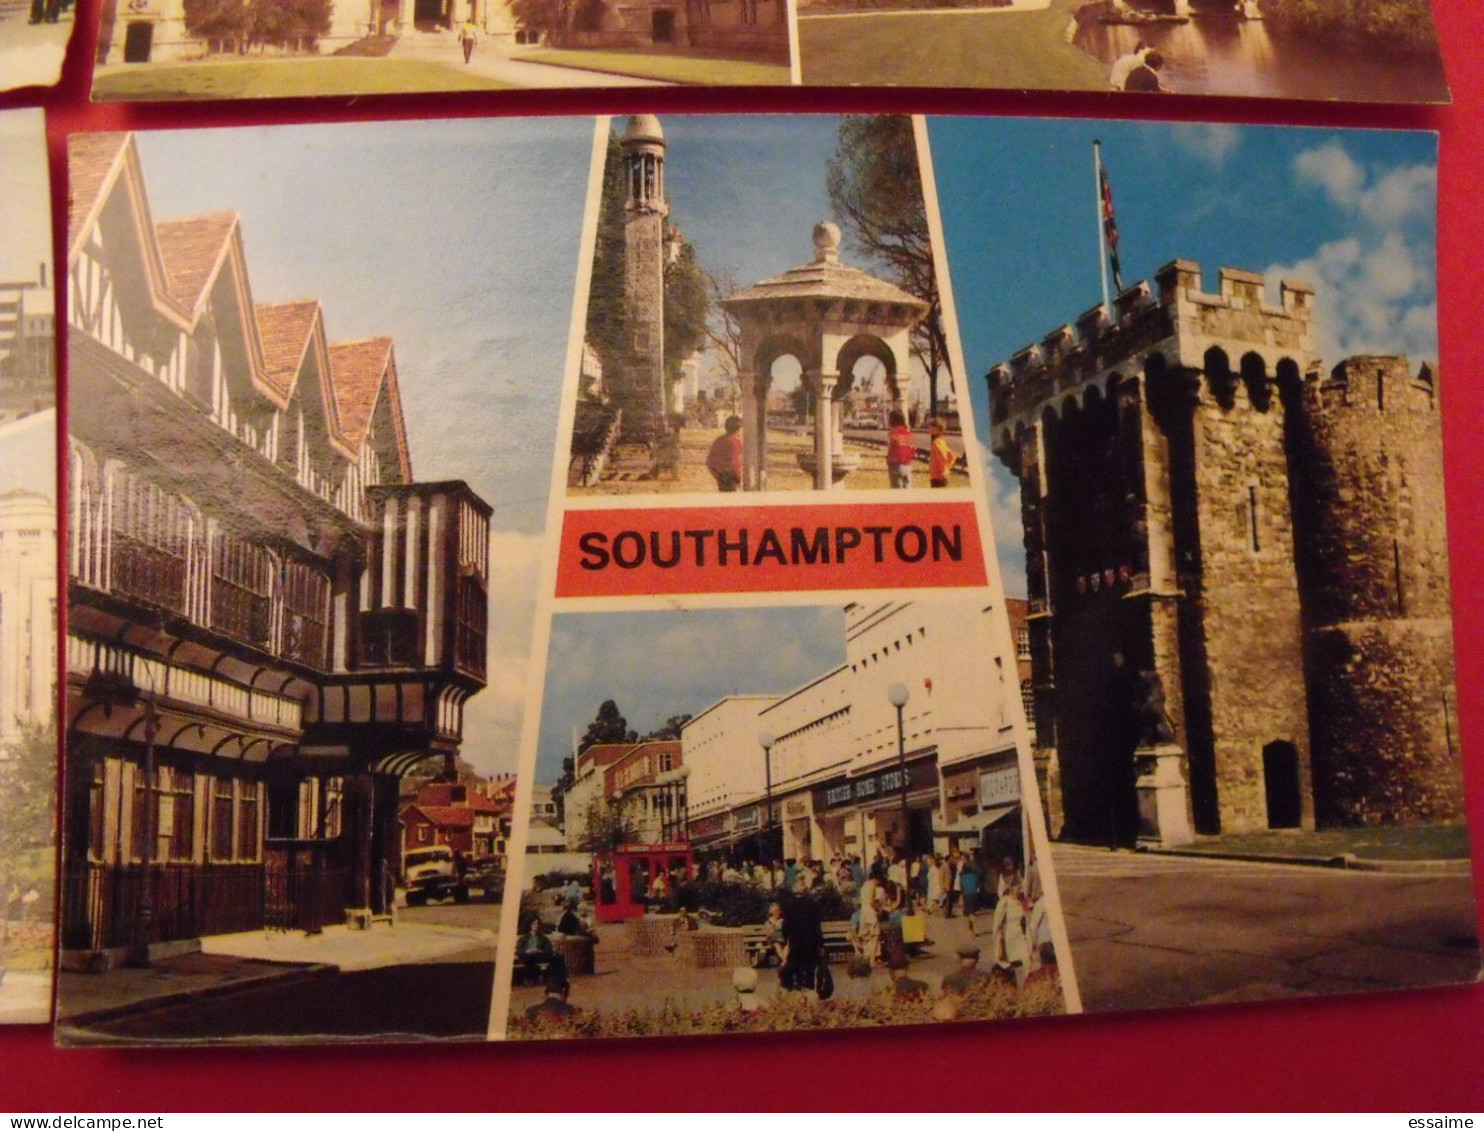 lot de 9 cartes postales. Royaume-Uni. Southampton Manchester Oxford London